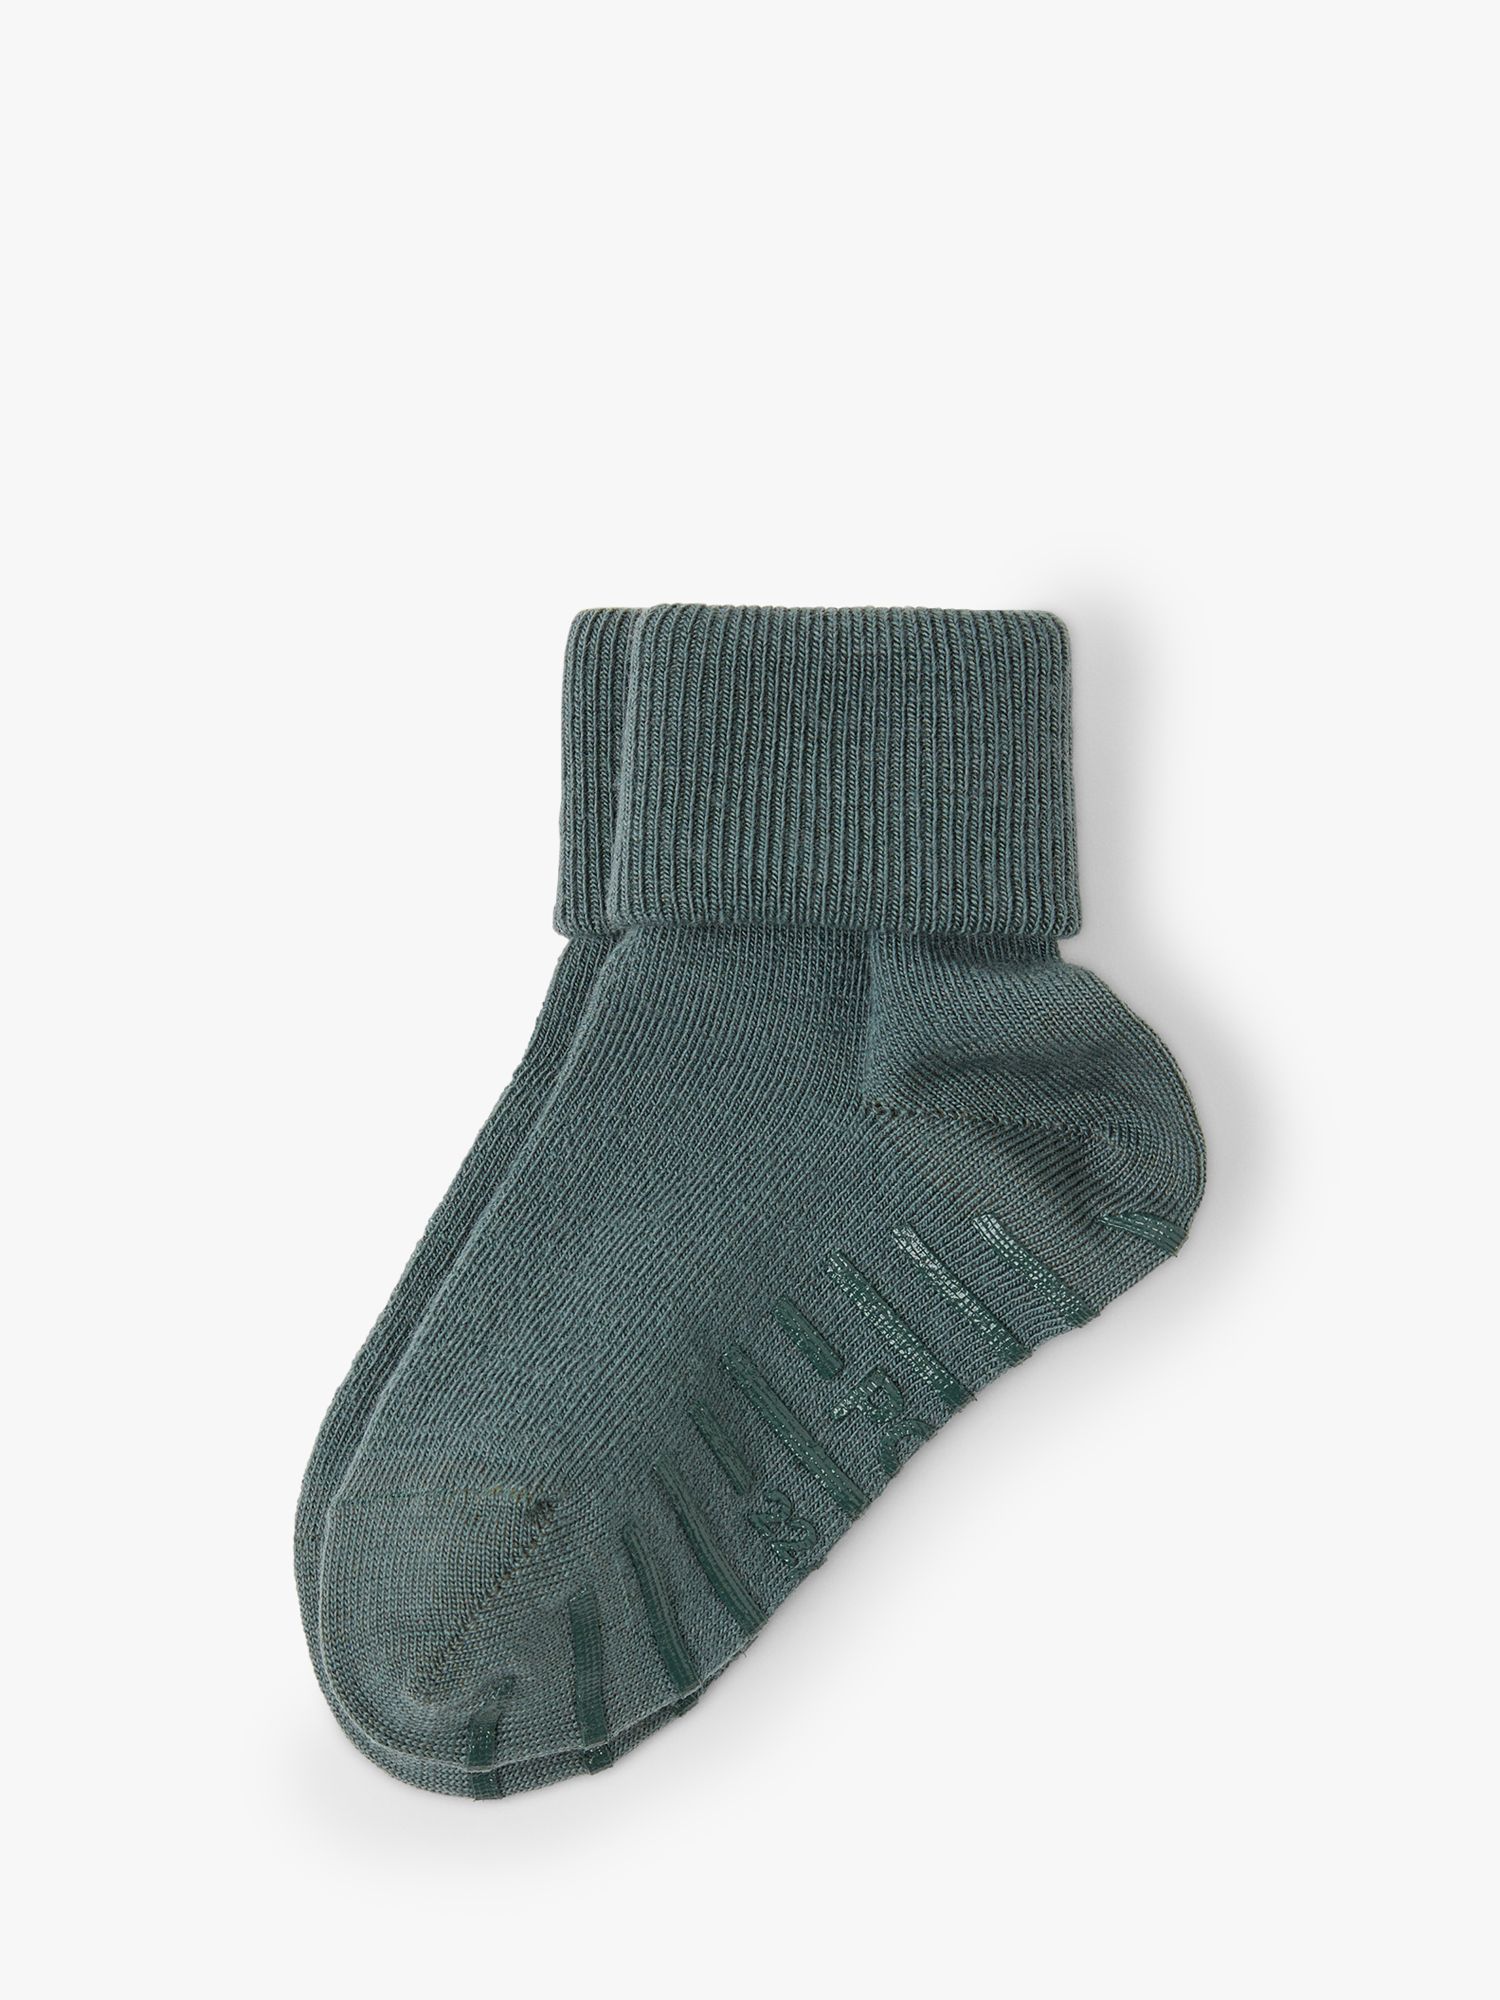 Детские носки-тапочки из смеси мериноса Polarn O. Pyret, зеленый капор из шерсти мериноса yutti 020 какао o s размер